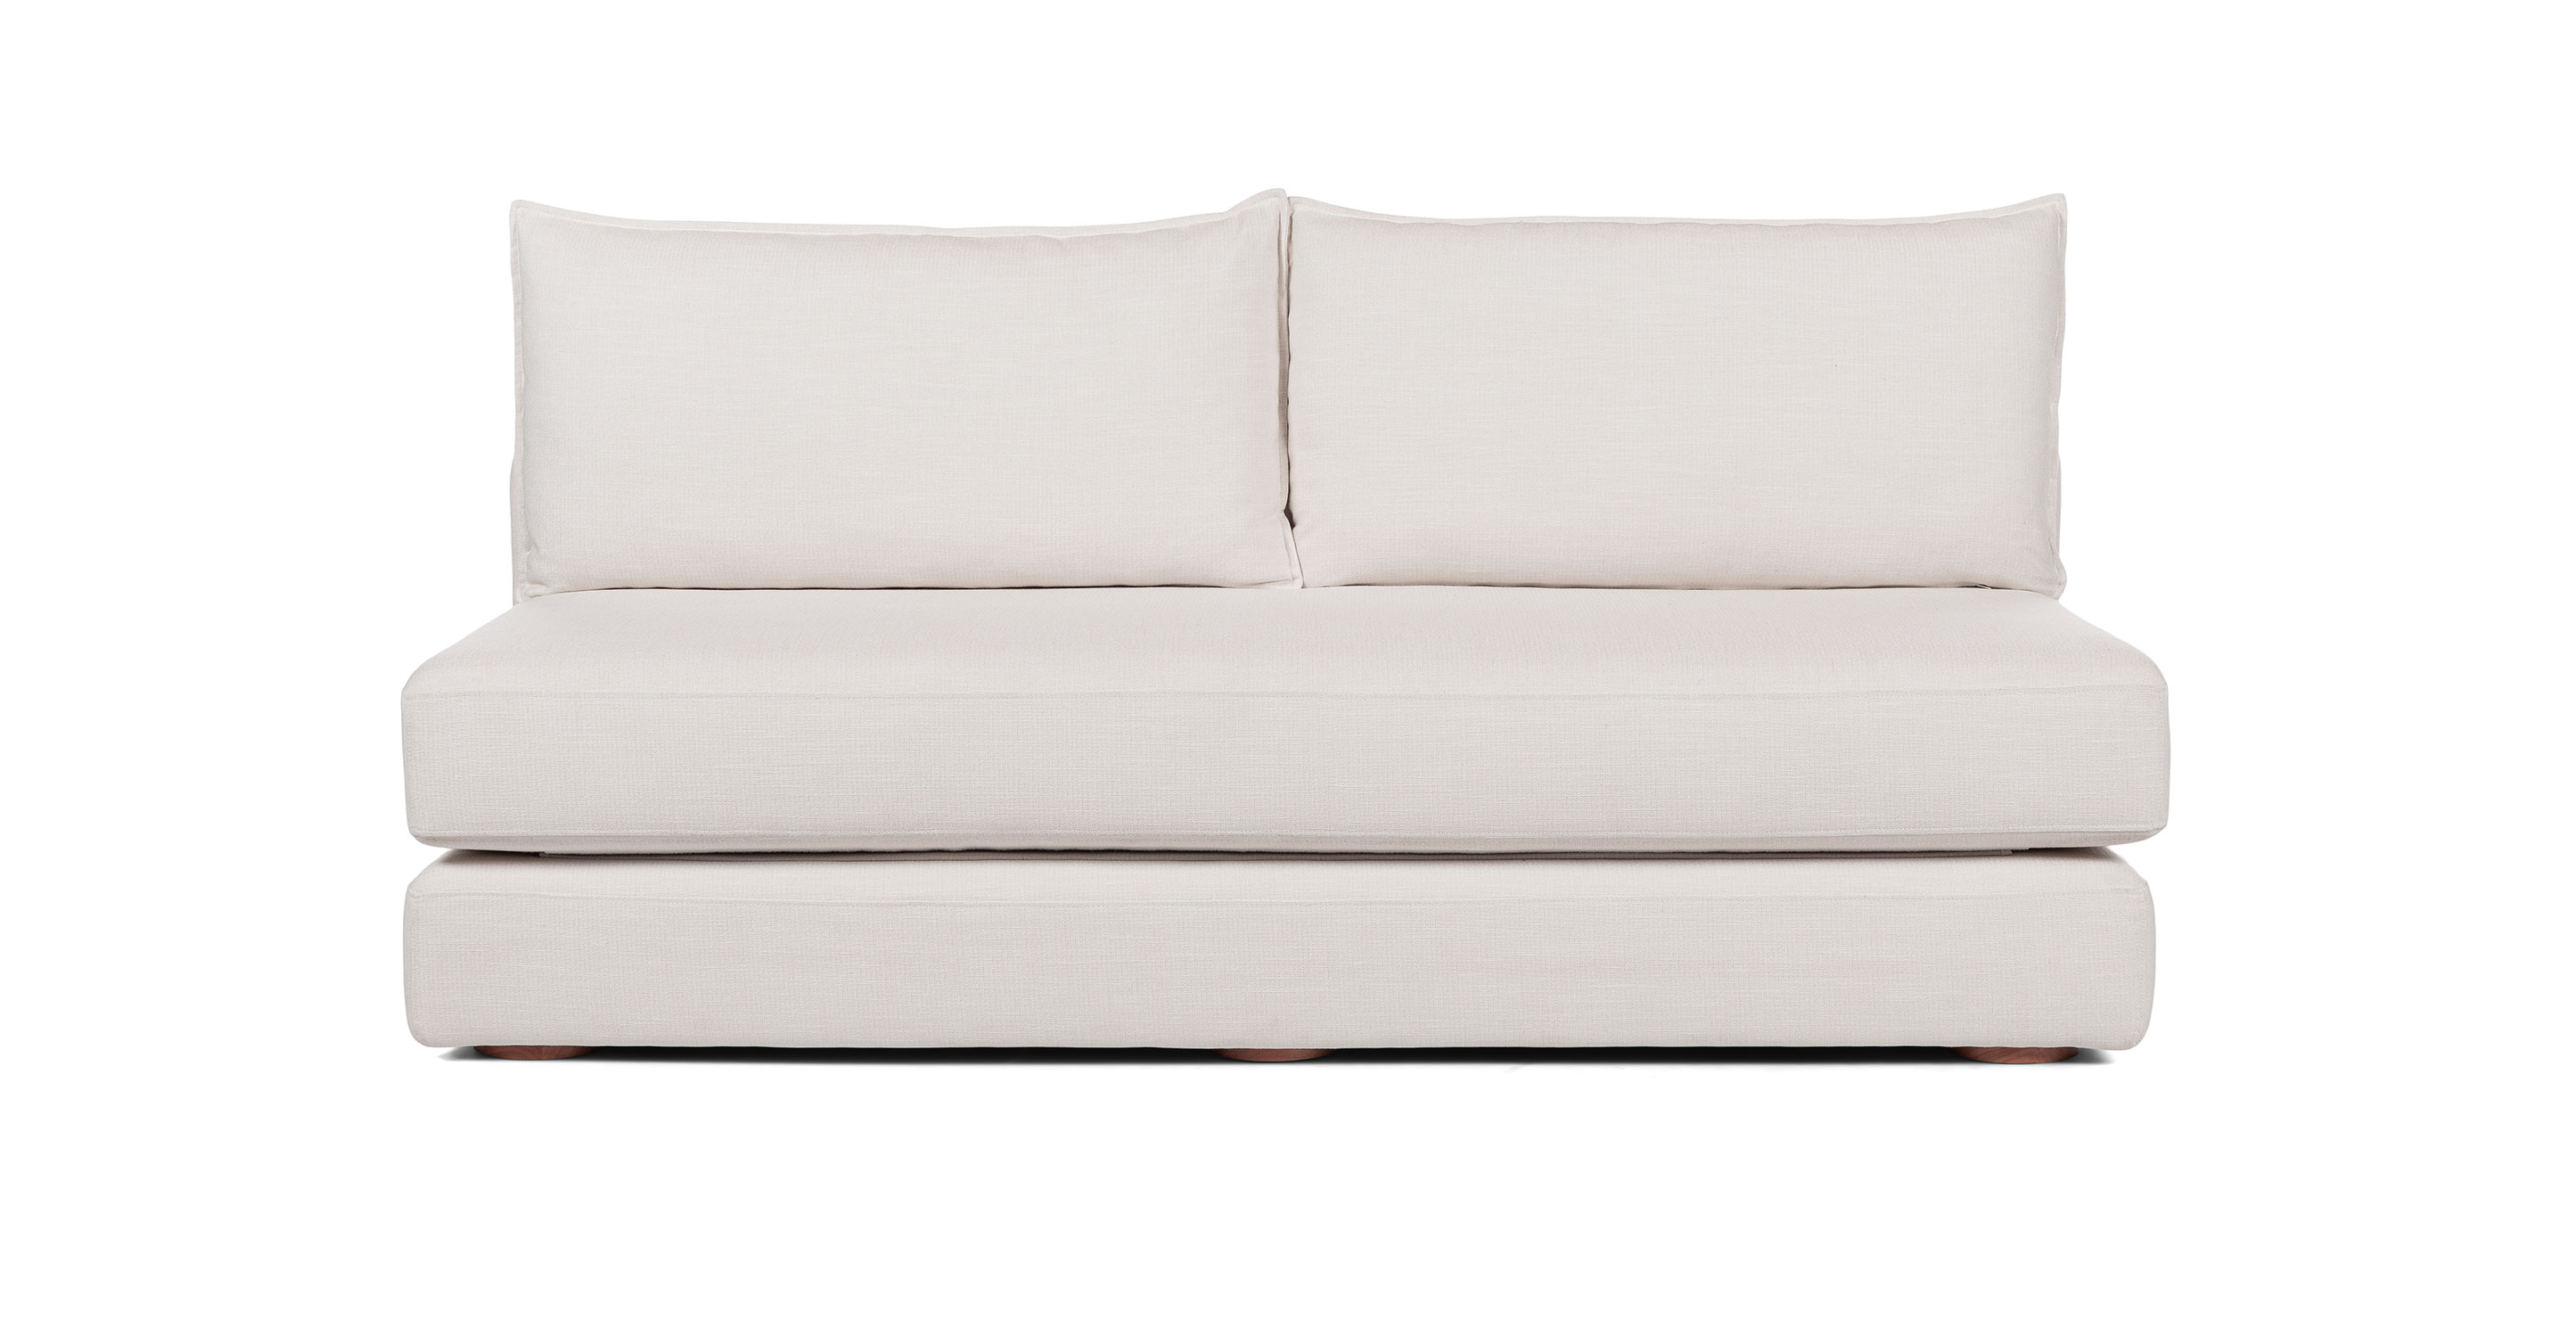 Braam Vintage White Sofa Bed